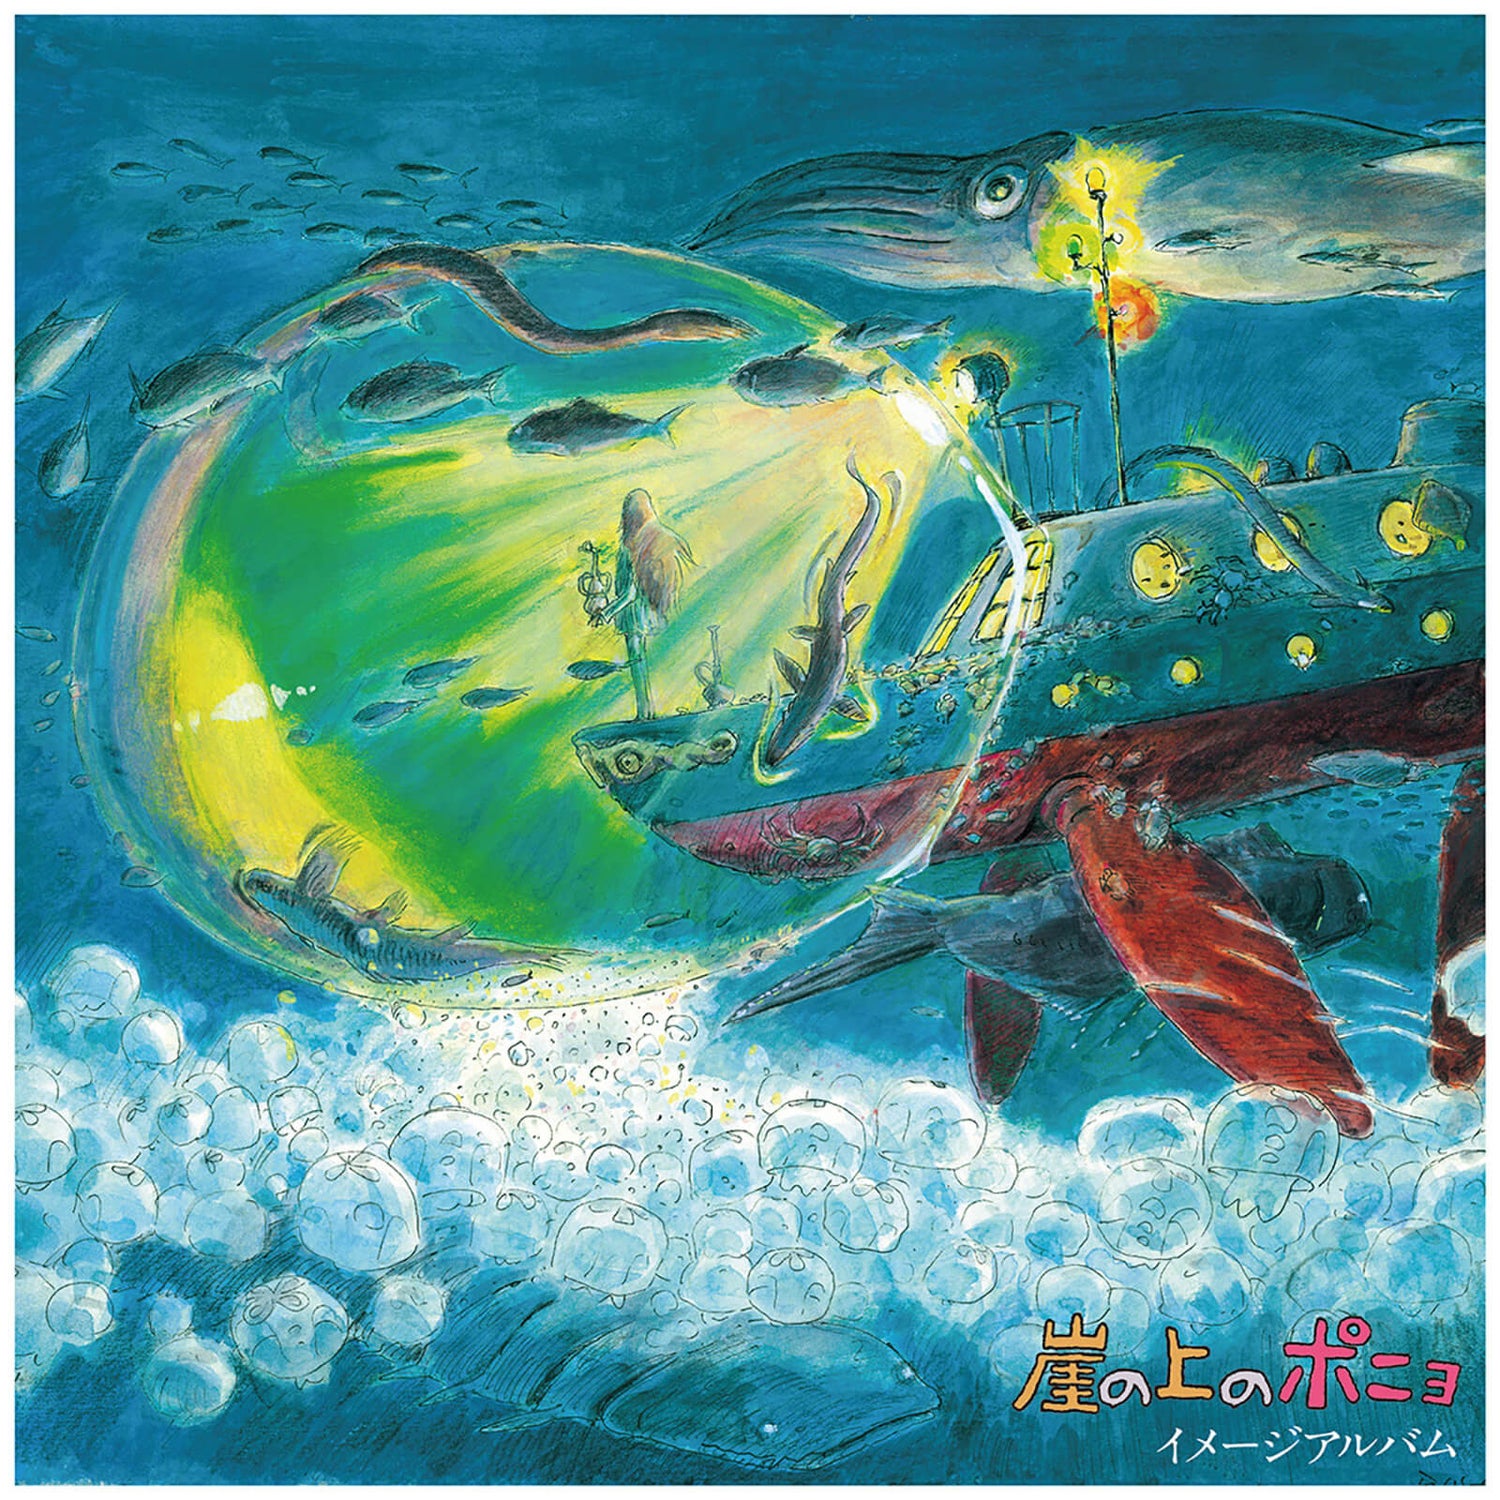 Studio Ghibli Records - Ponyo On The Cliff By The Sea: Image Album Vinyl